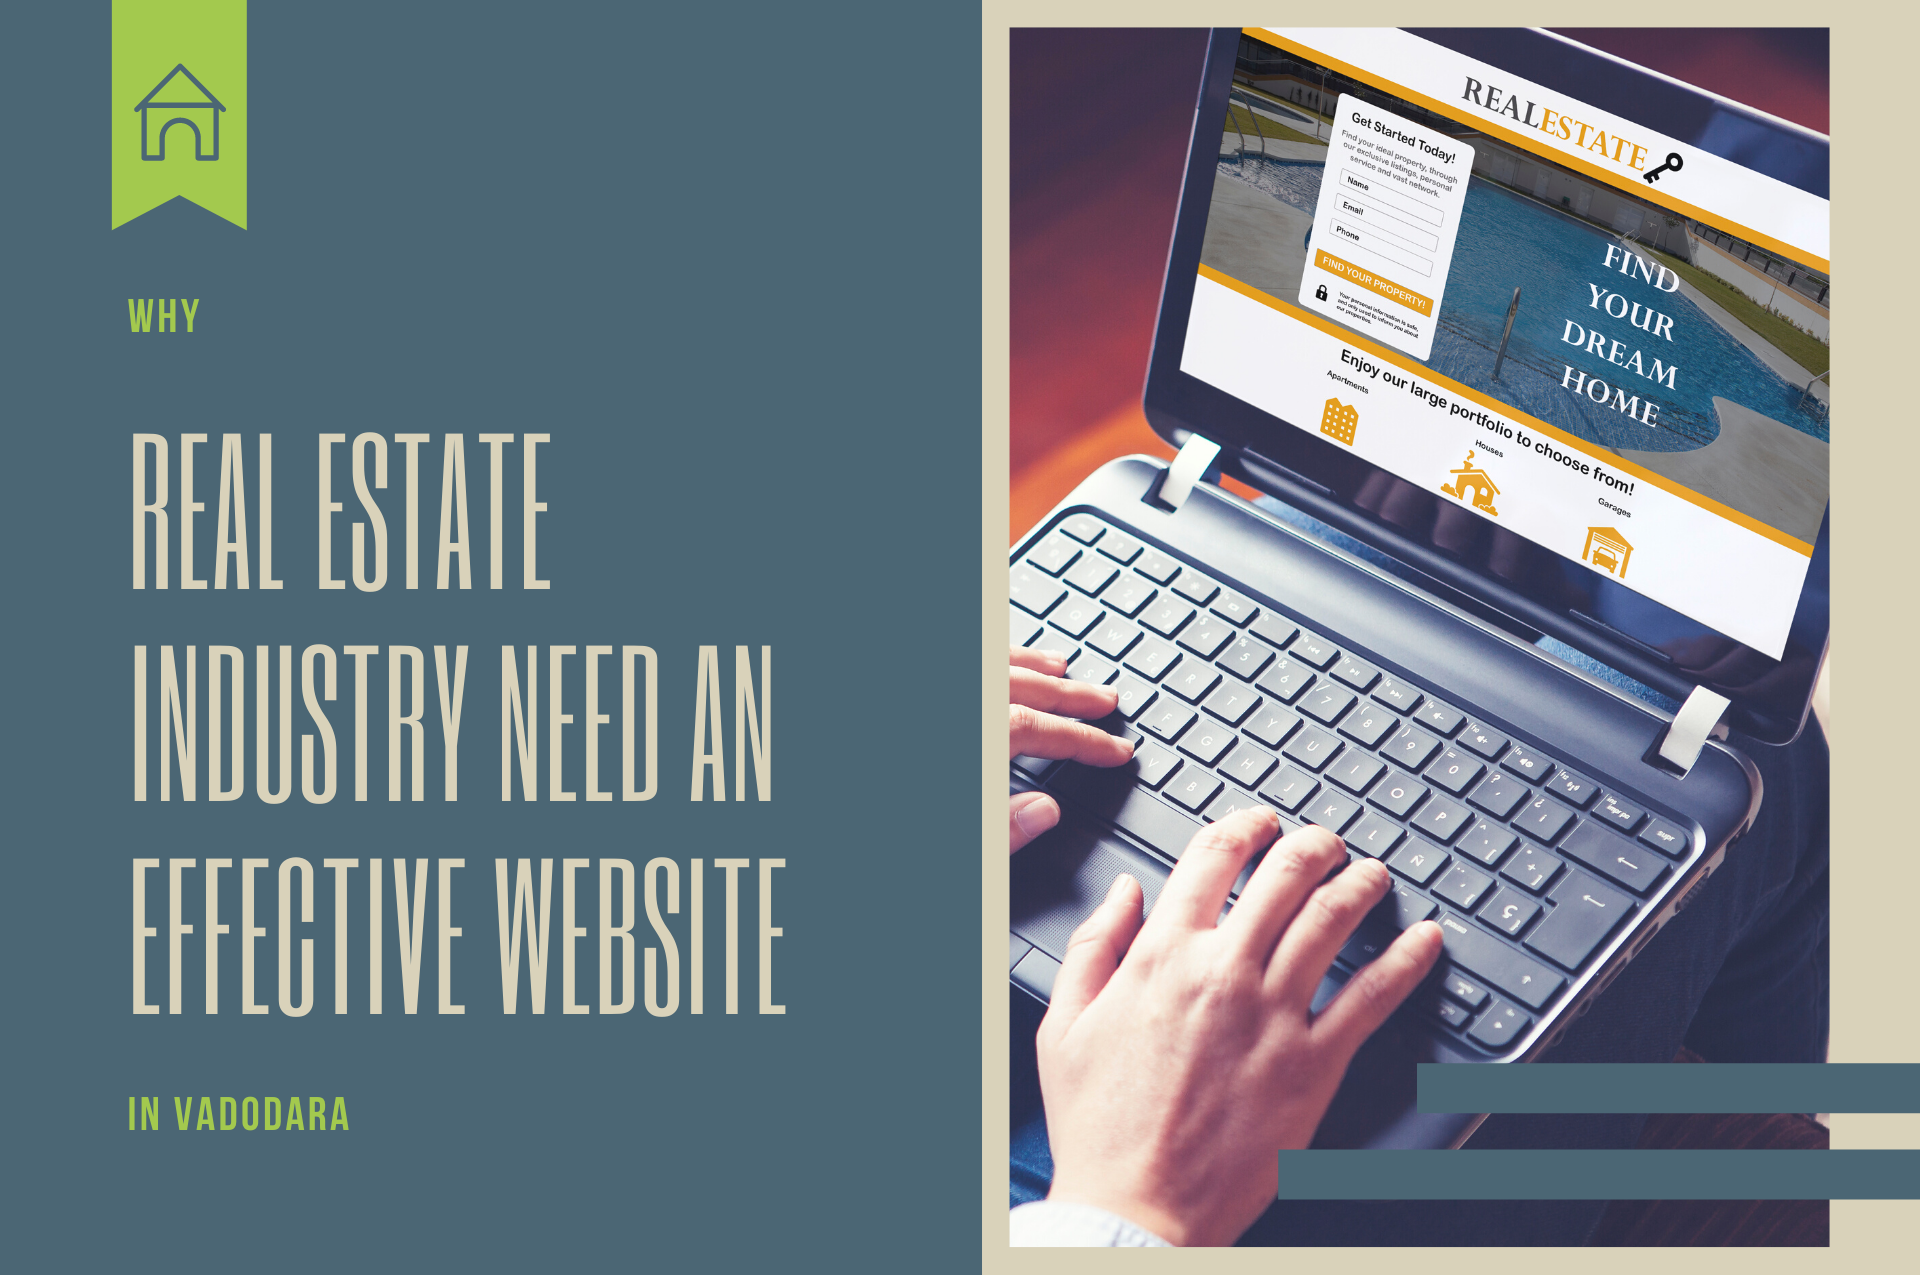 Why Real Estate Industry Need an Effective Website in Vadodara?